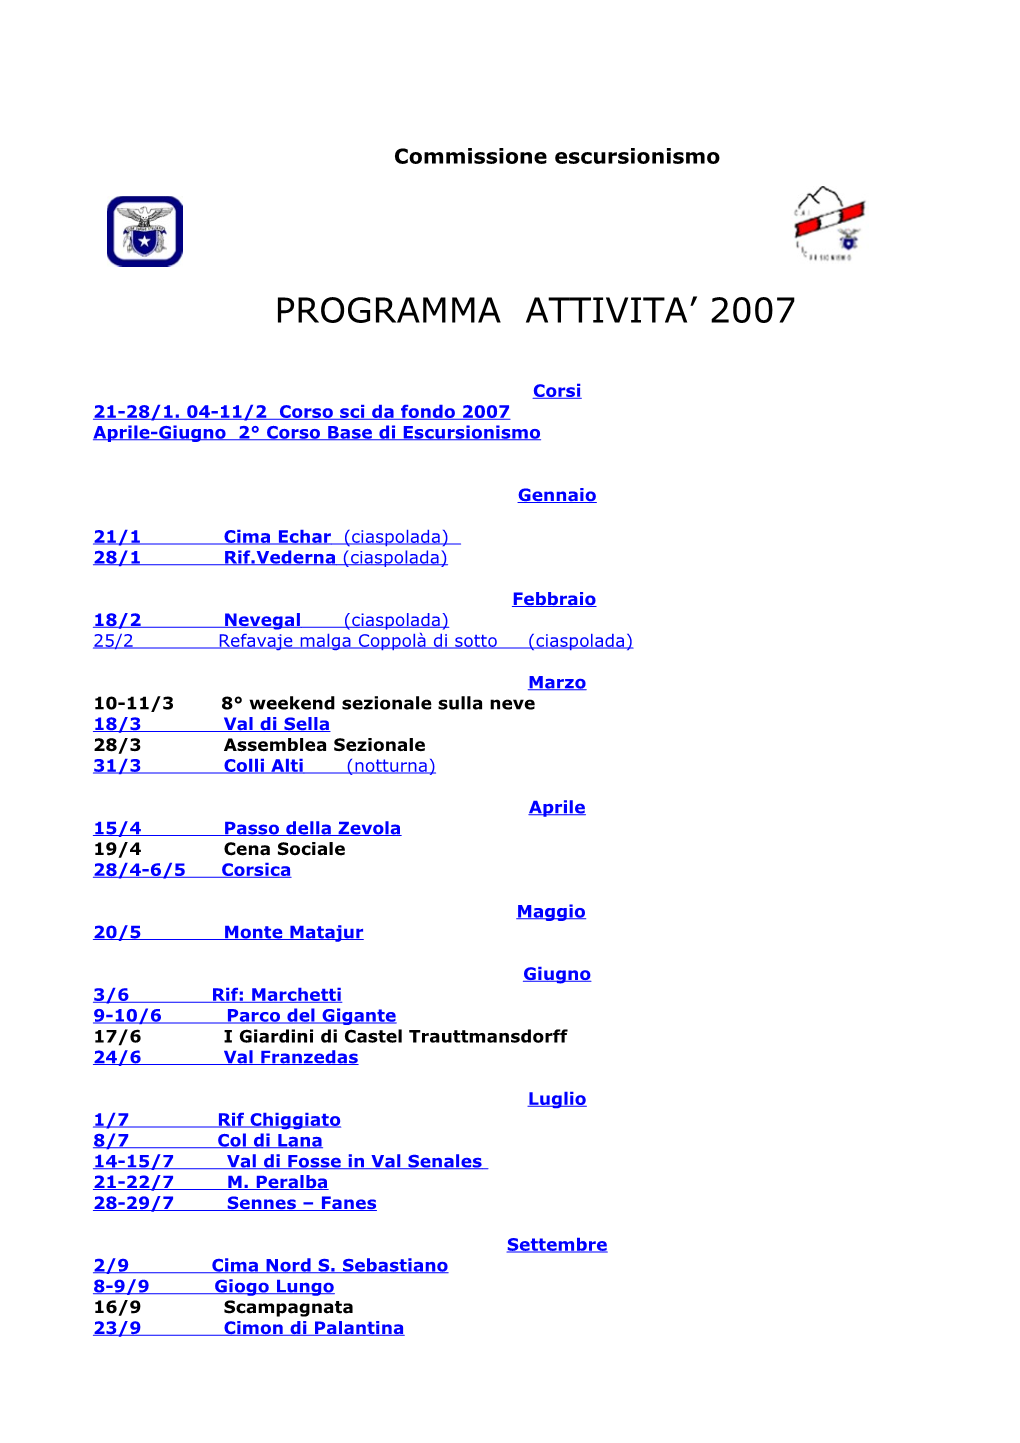 Programma Attivita' 2007